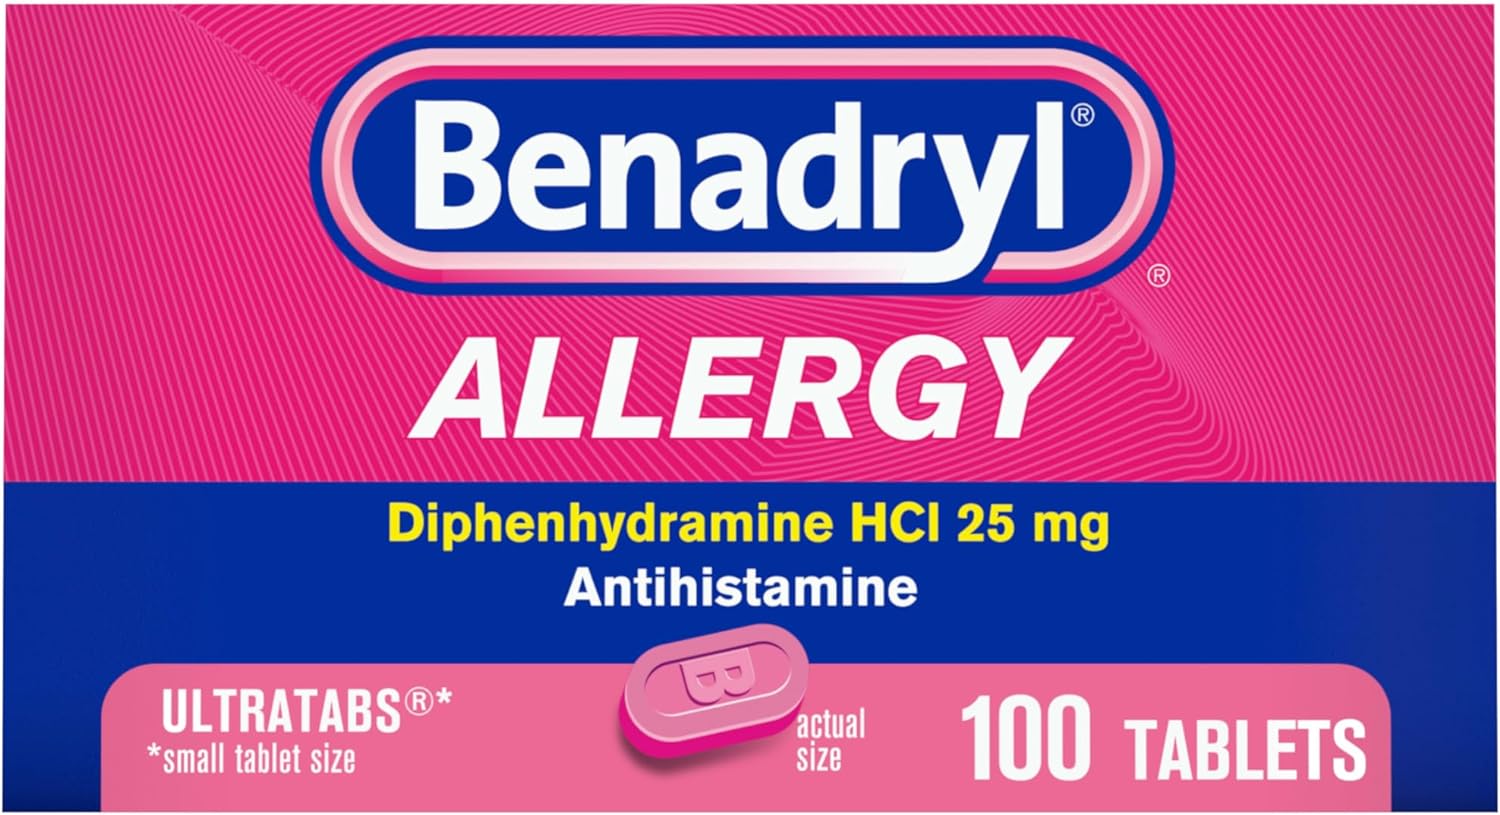 [S&S] $6.21: 100-Ct Benadryl Allergy Antihistamine Ultratabs 25mg Diphenhydramine HCl Tablets at Amazon